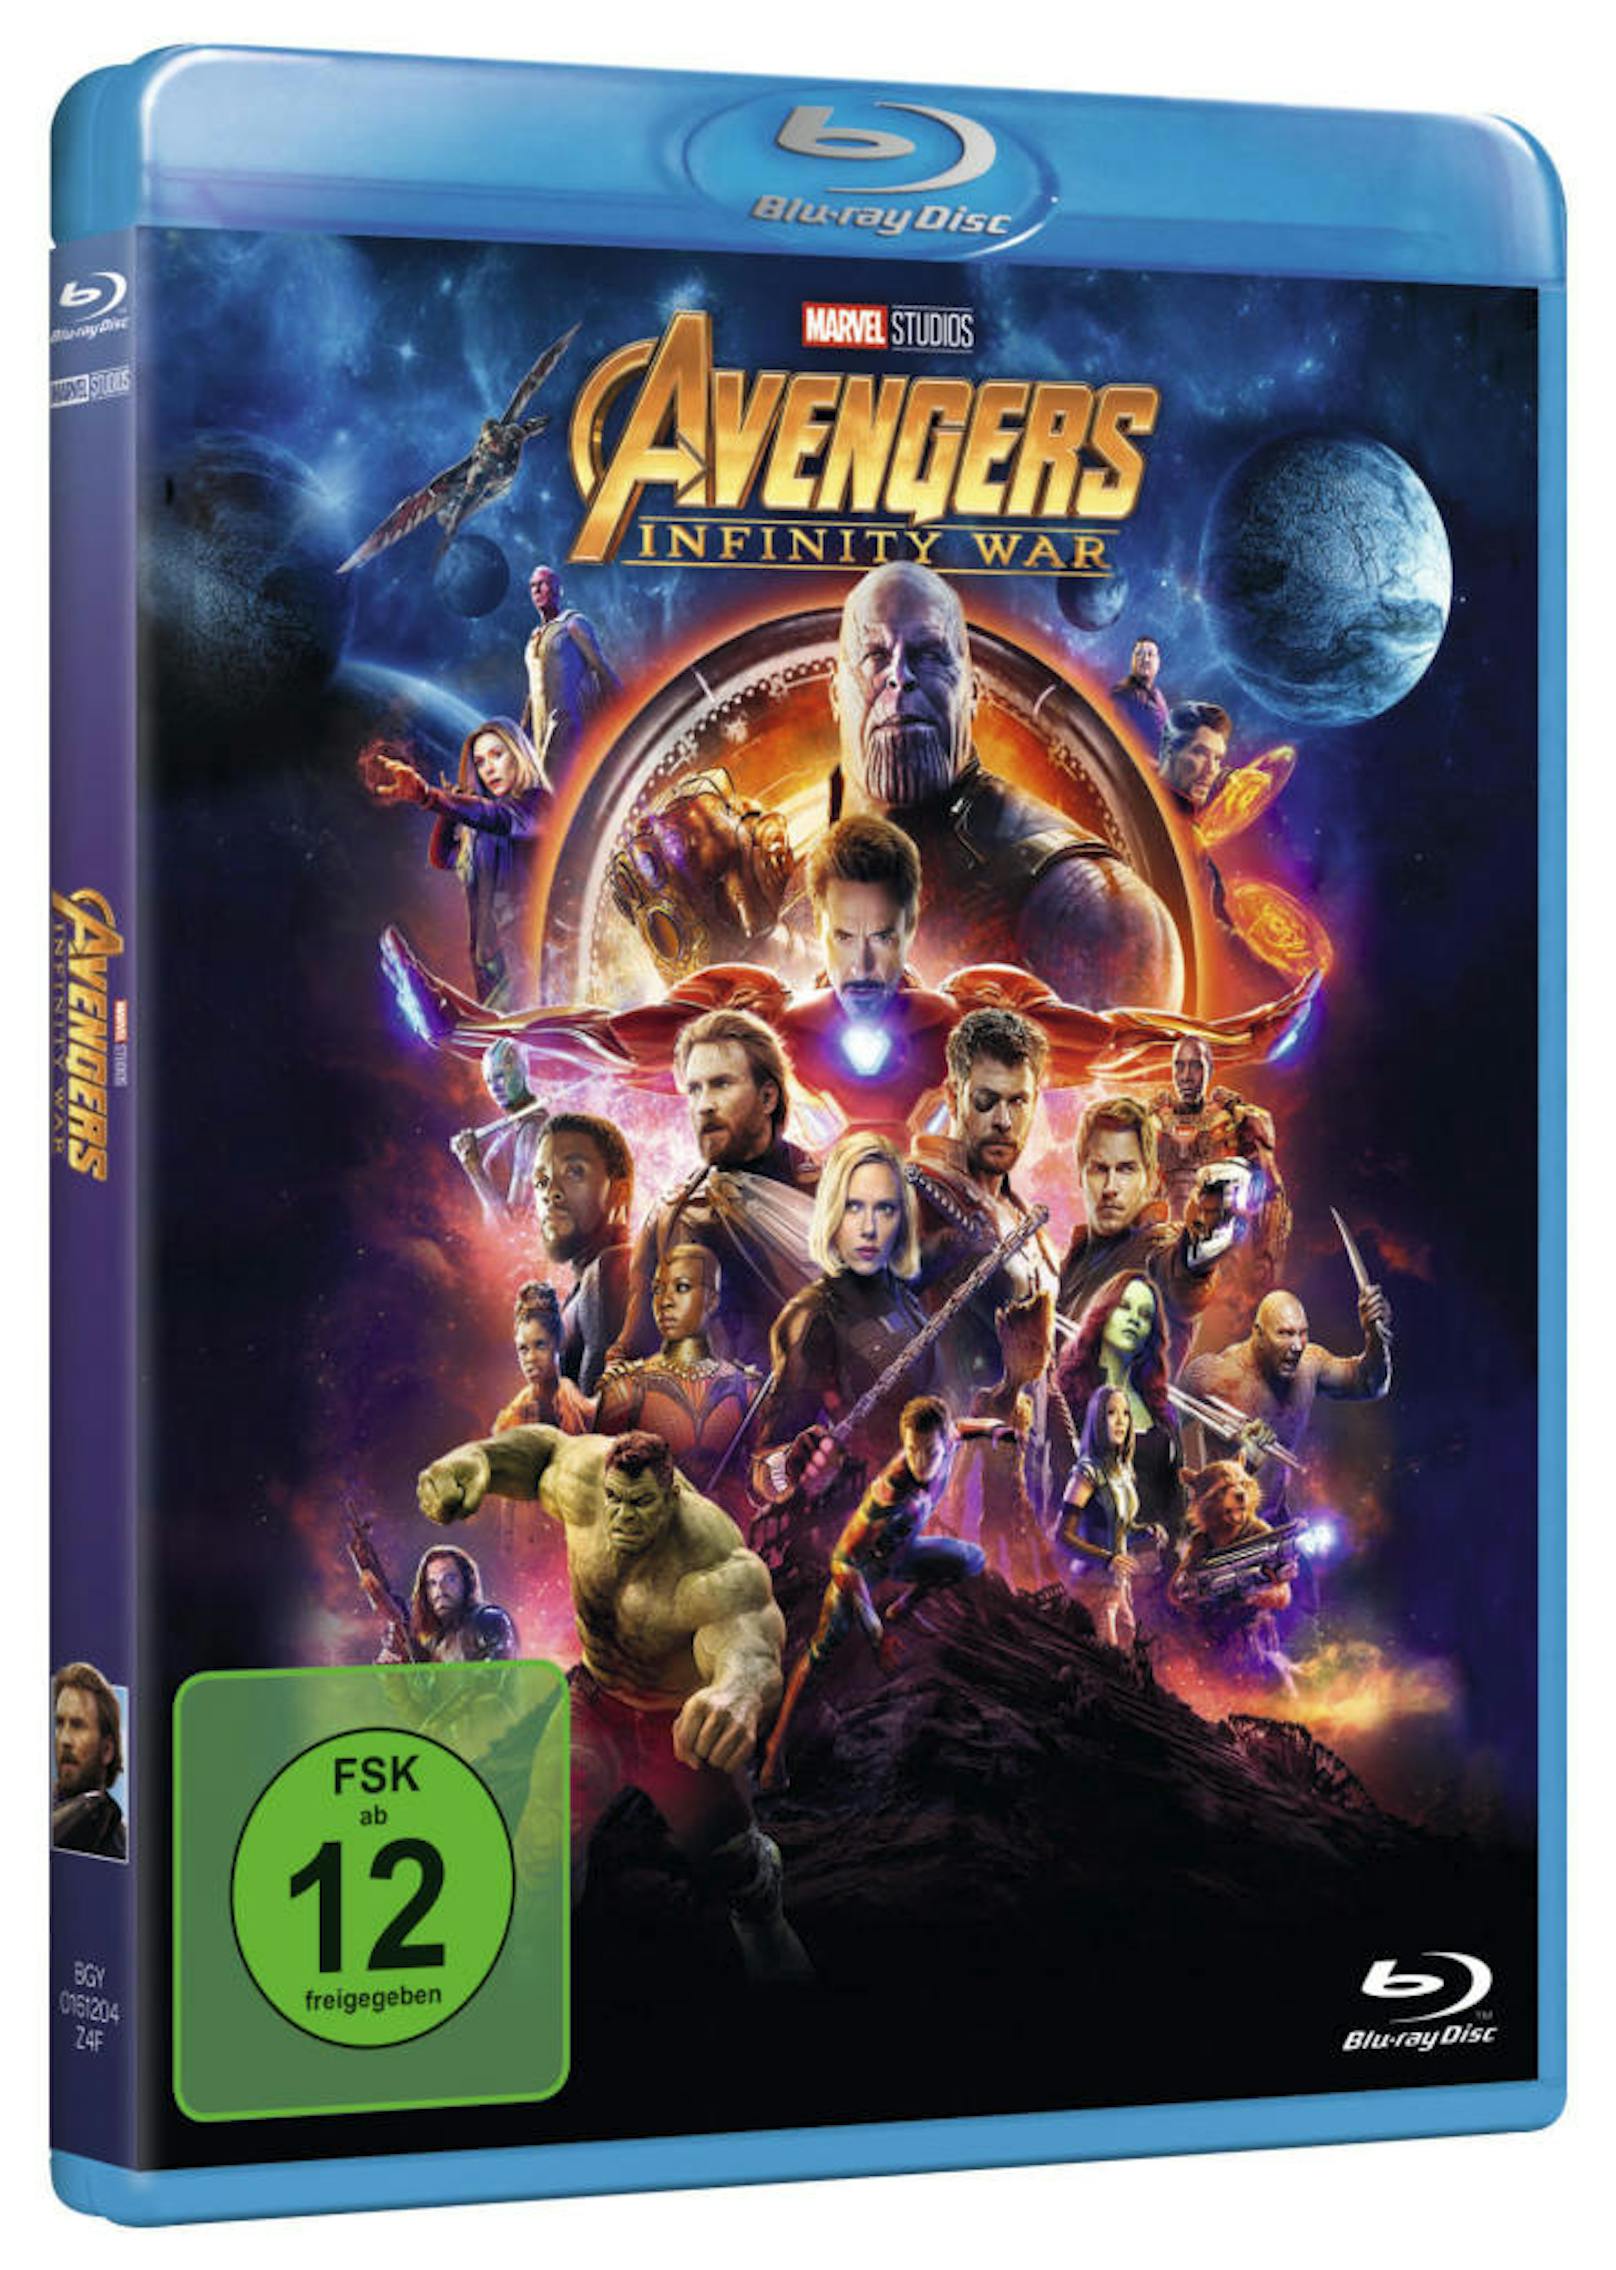 Blu-ray von "Avengers: Infinity War"